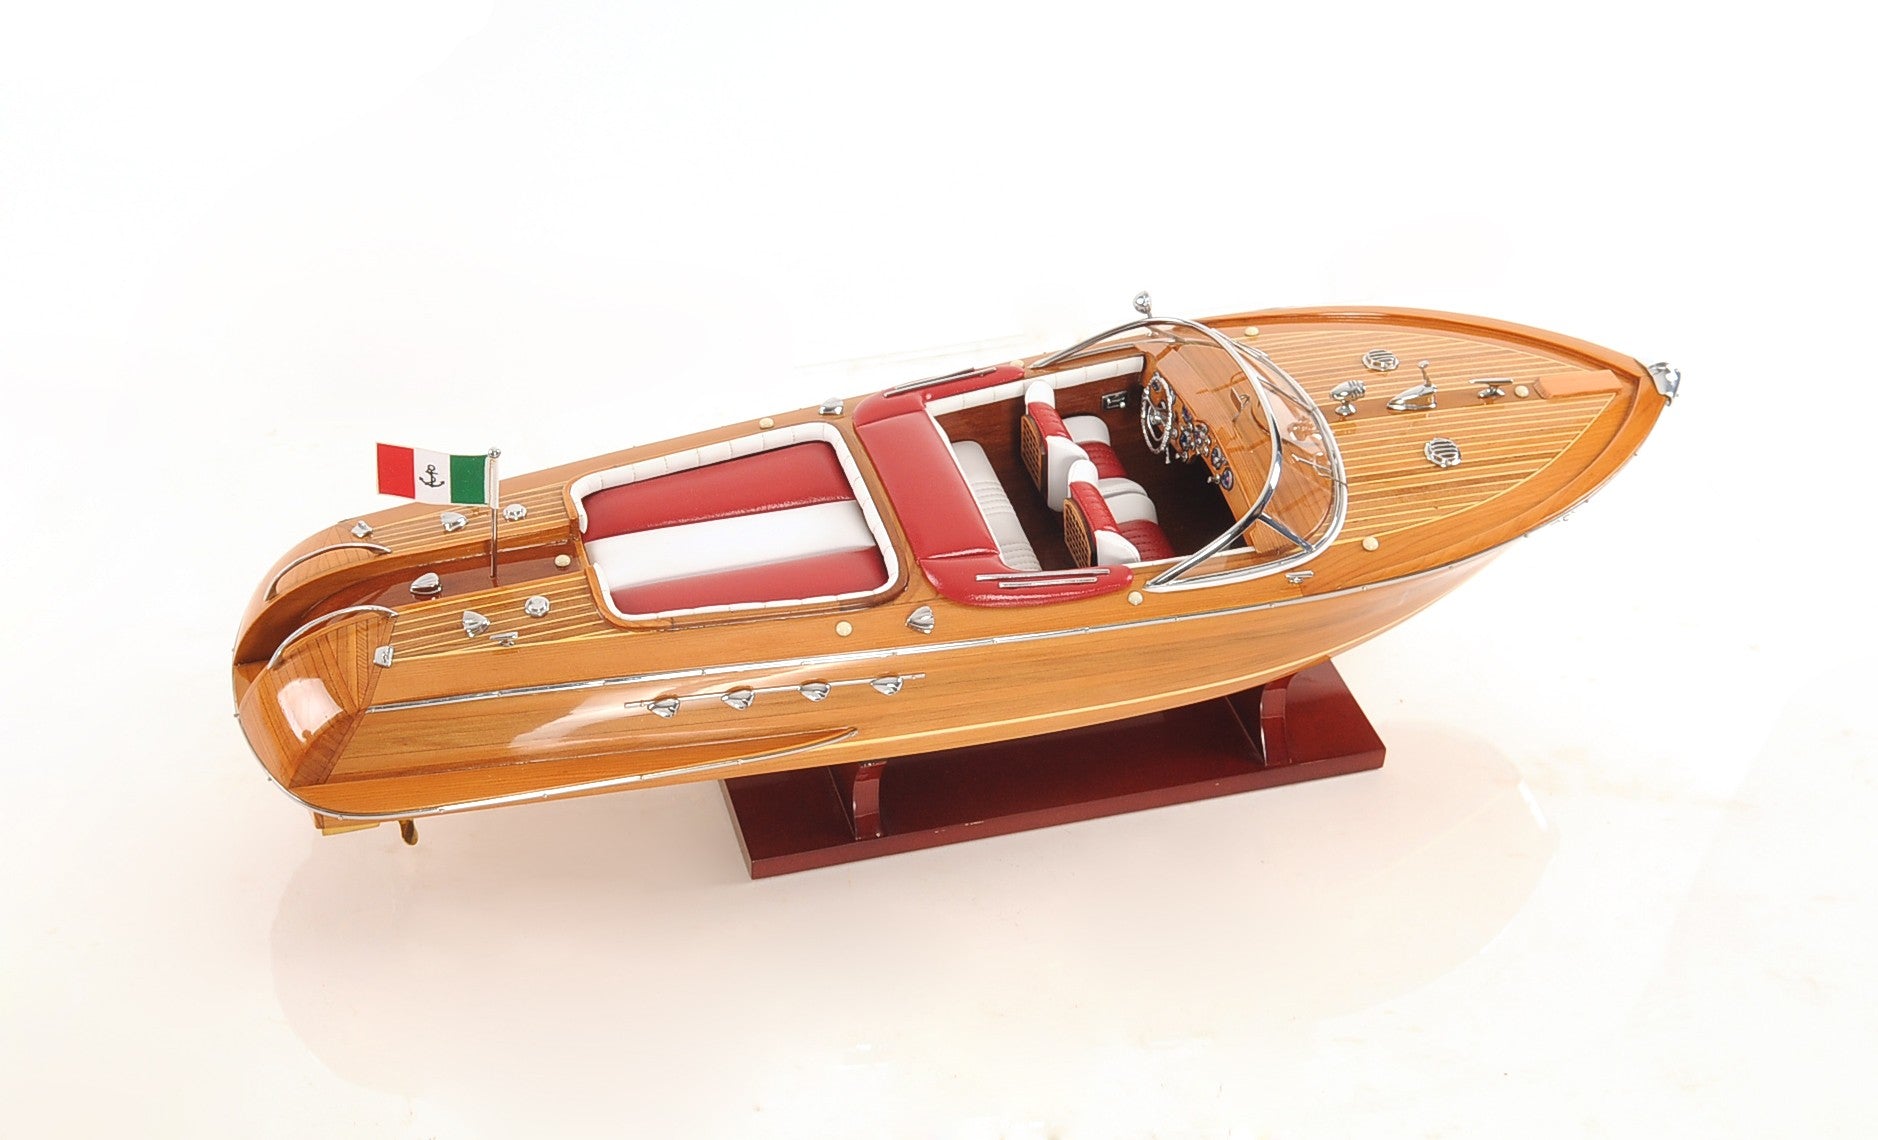 7" Wood Brown Riva Aqurama Speedboat Hand Painted Decorative Boat